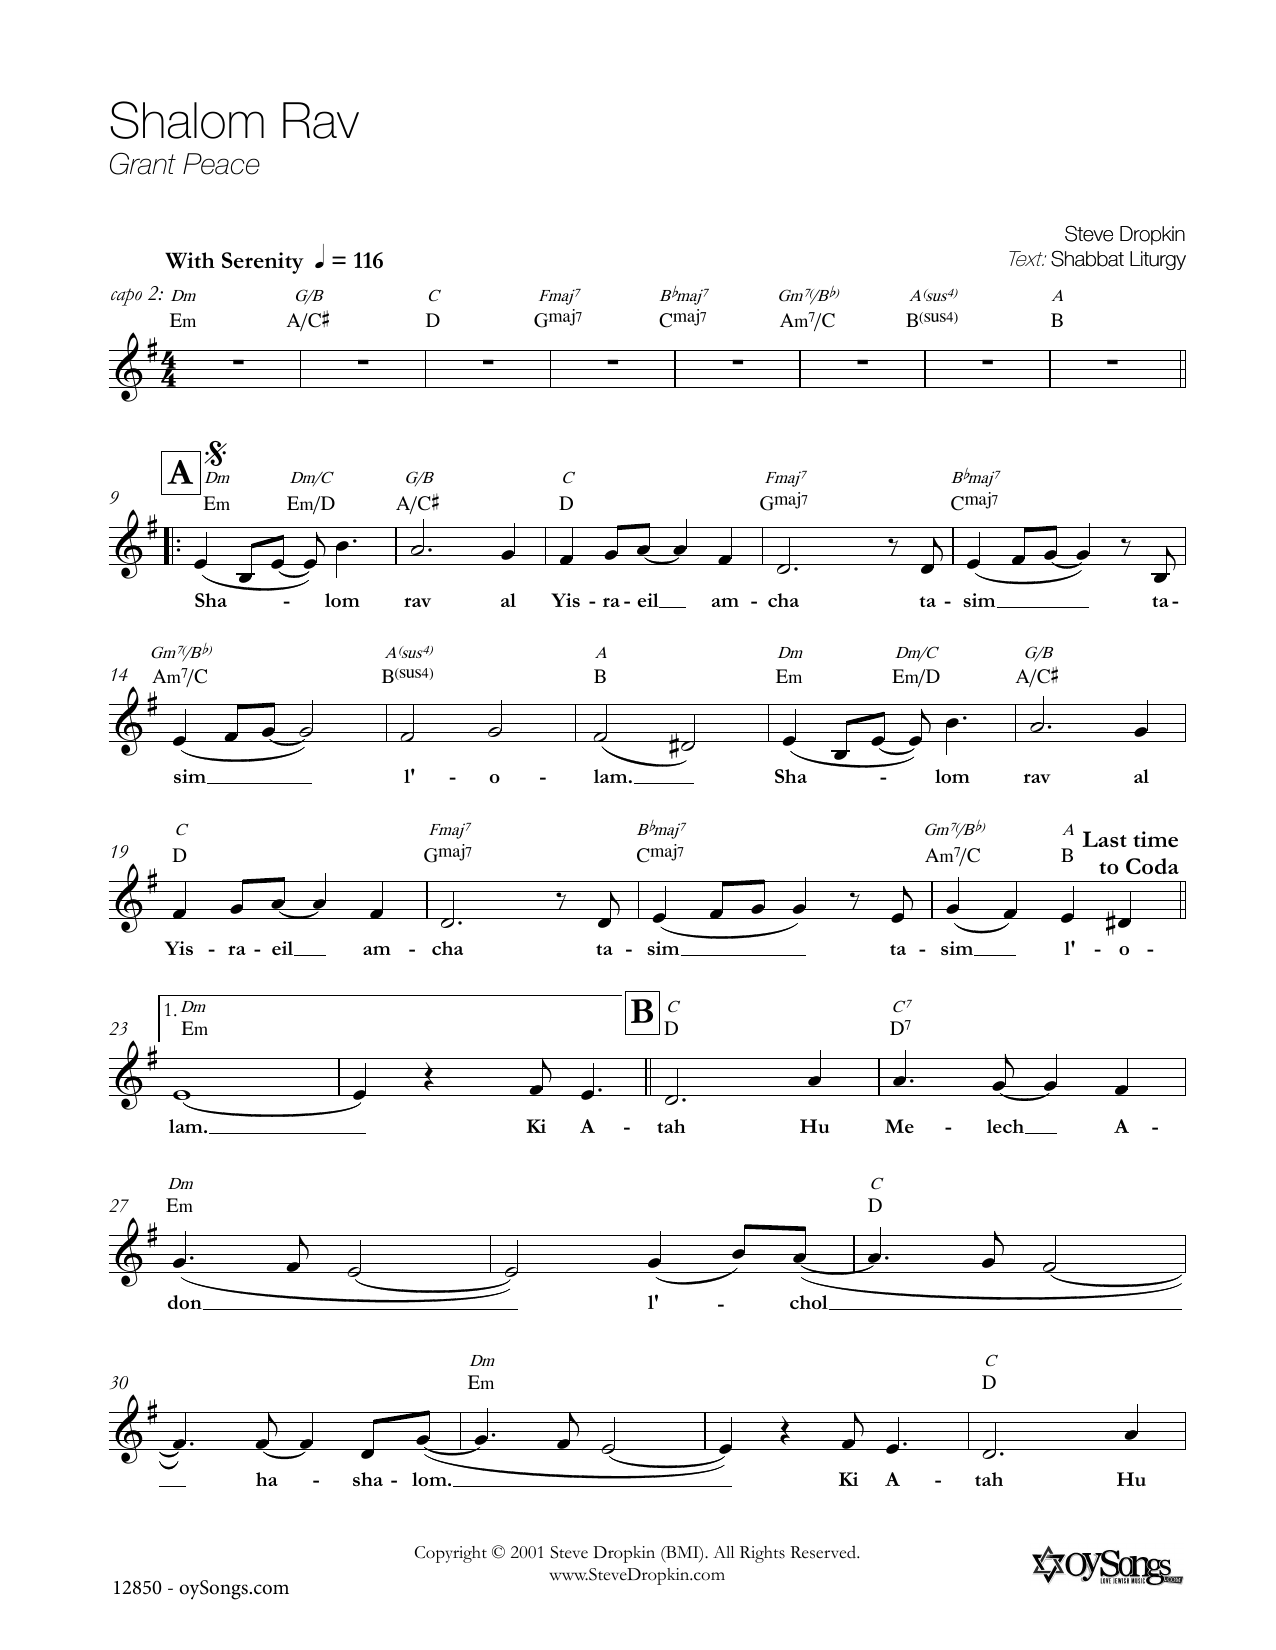 Steve Dropkin Shalom Rav Sheet Music Notes & Chords for Melody Line, Lyrics & Chords - Download or Print PDF